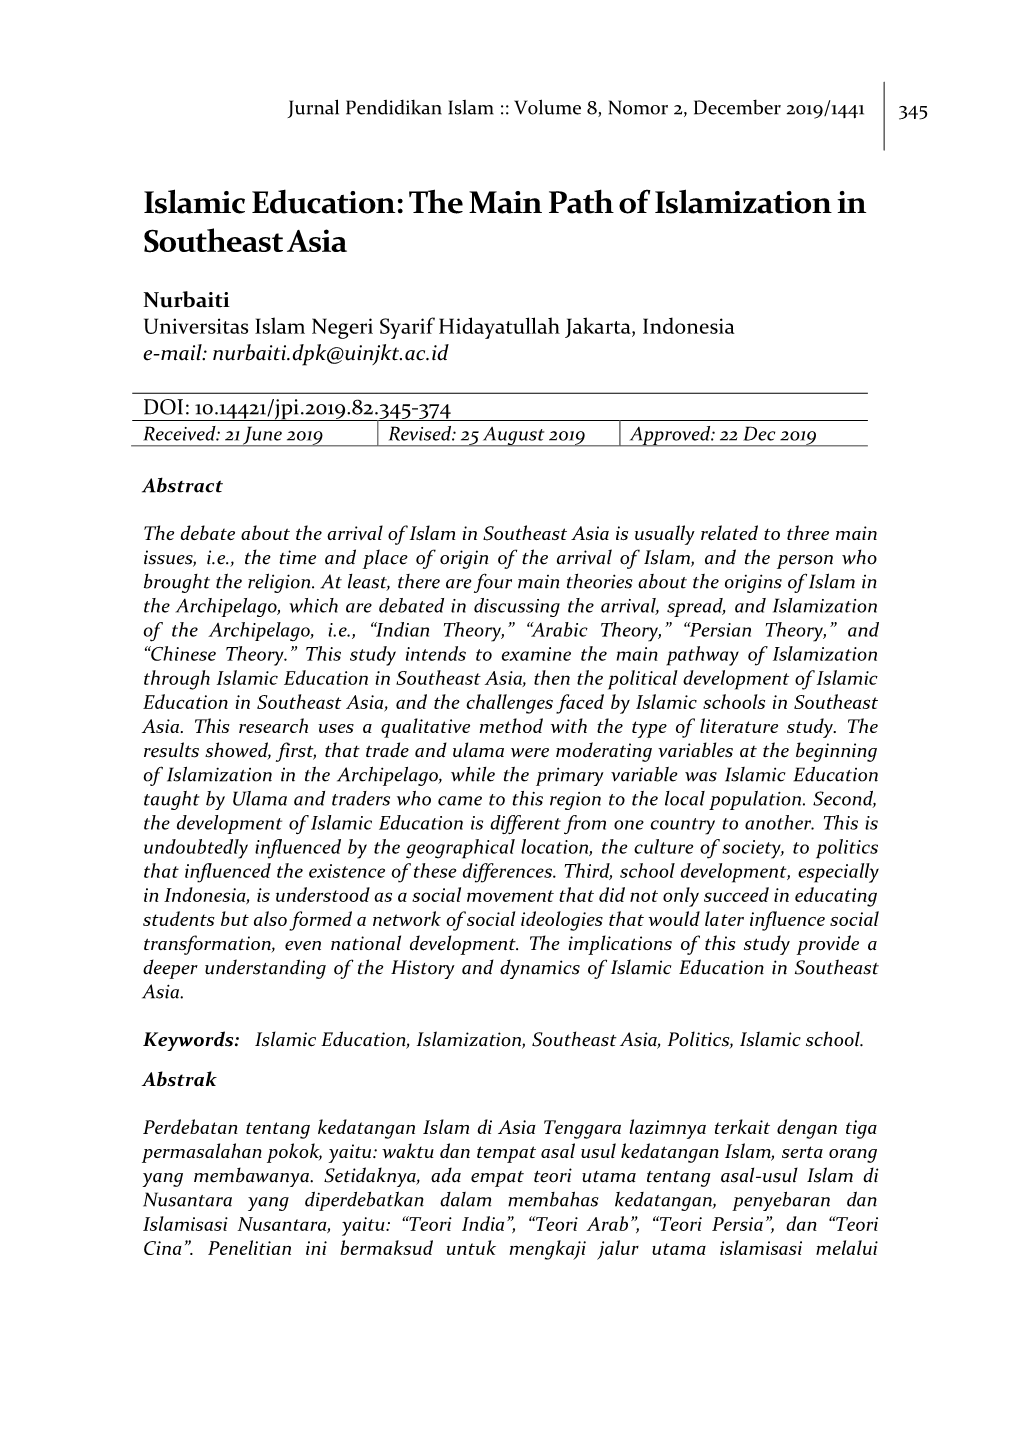 Islamic Education: the Main Path of Islamization in Southeast Asia